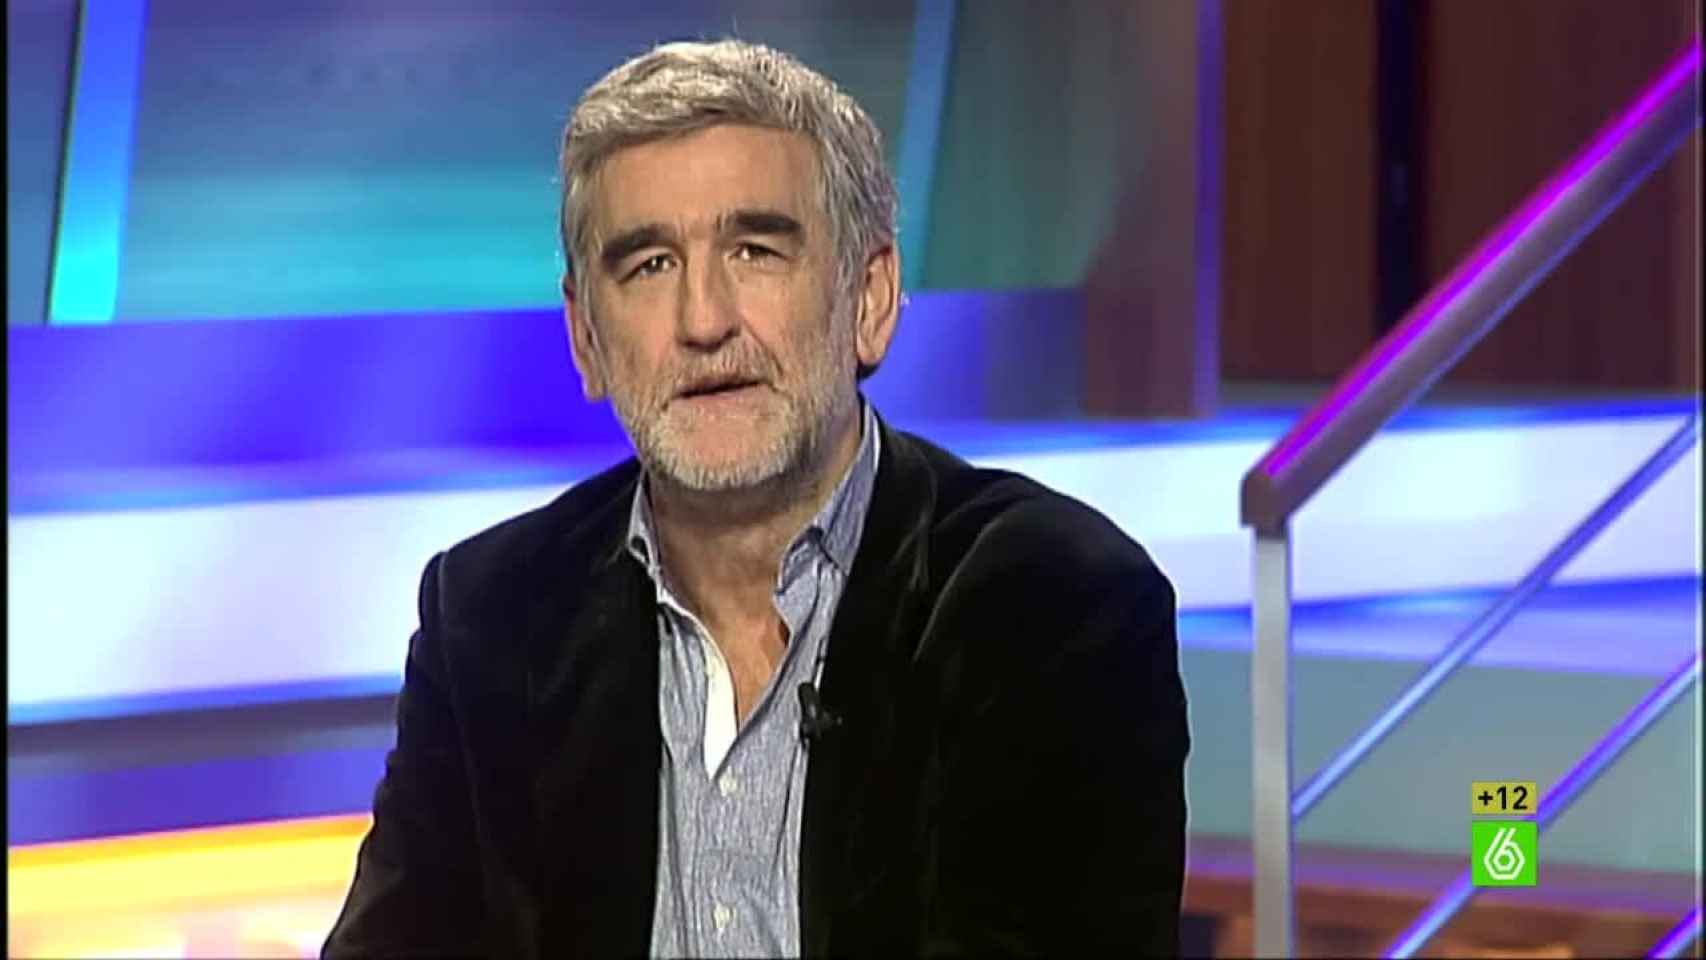 TVE ficha Juanma López Iturriaga para presentar el concurso ‘Crush’